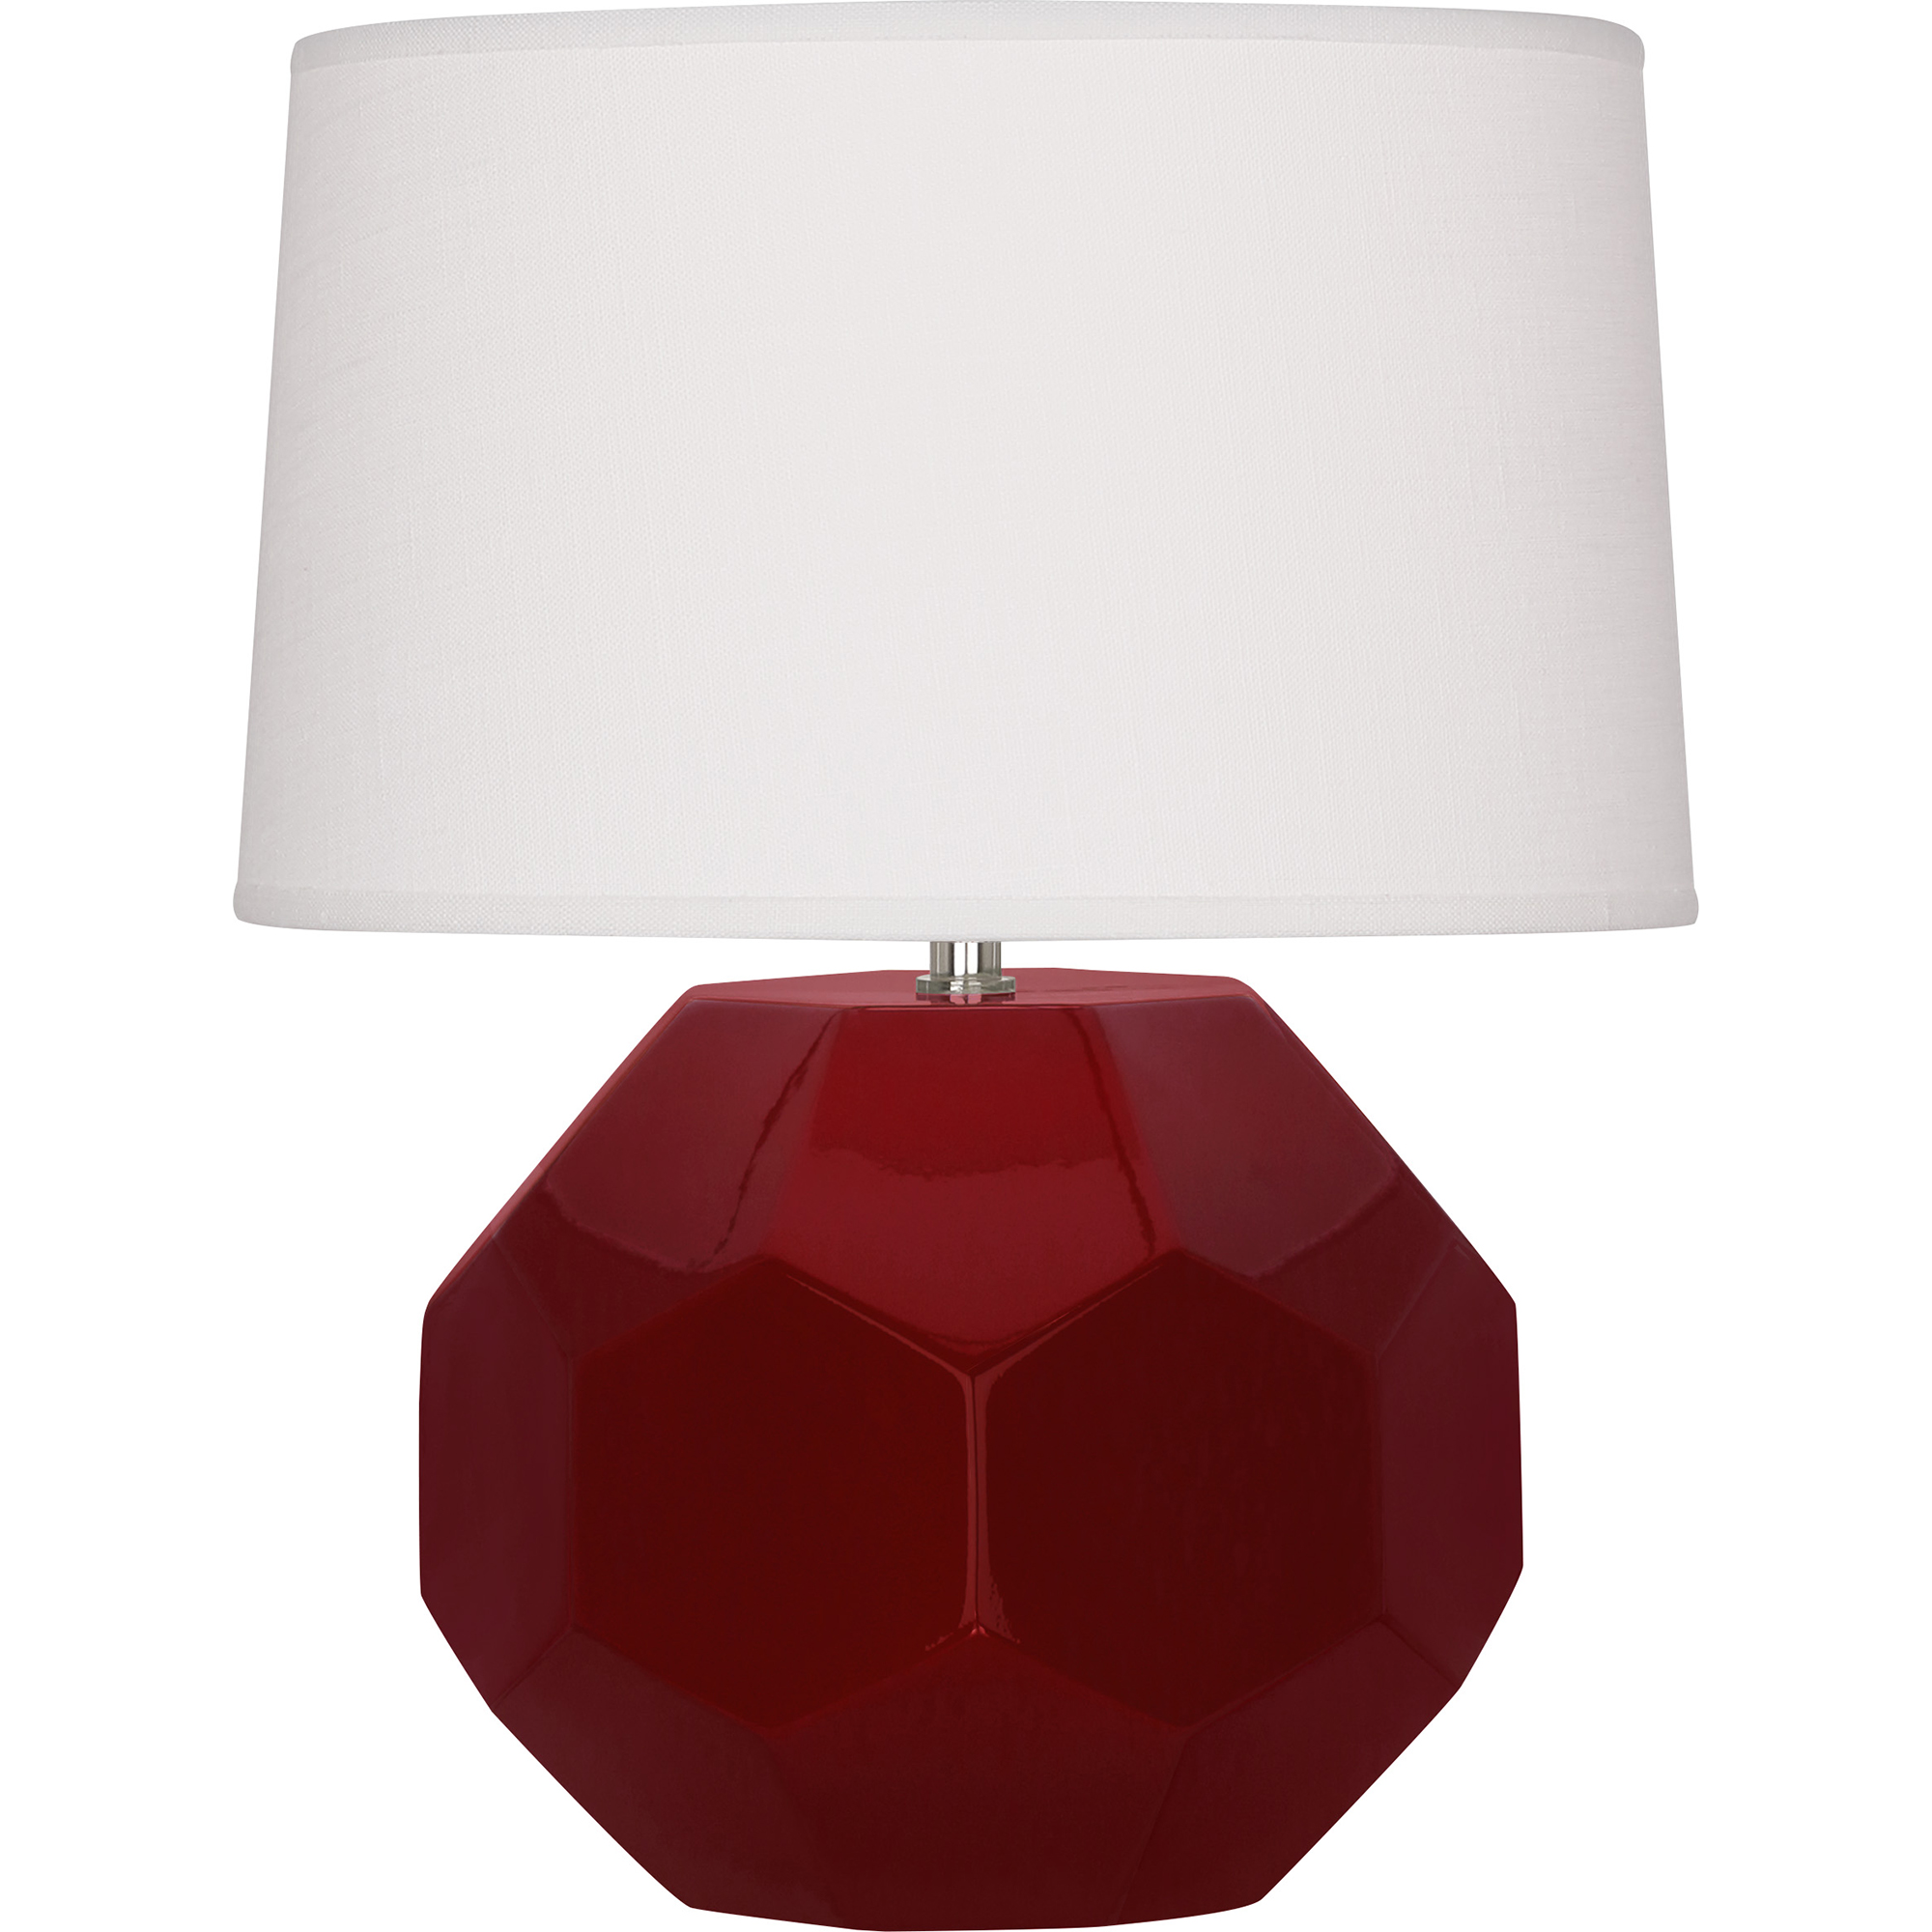 Franklin Table Lamp Style #SA01